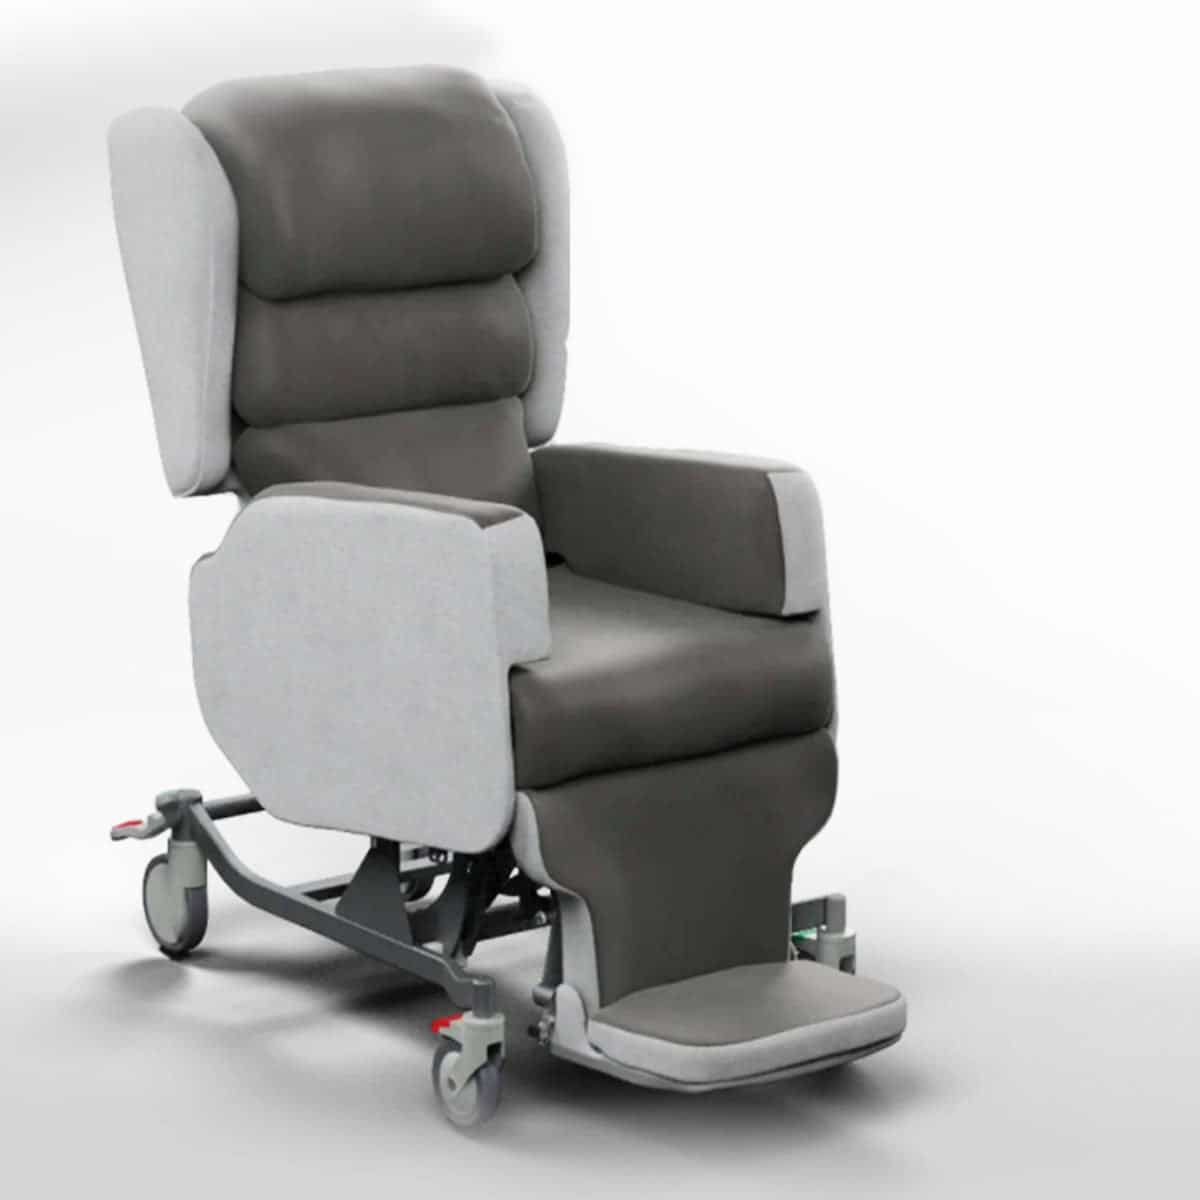 Enable Lifecare Configura Advance Mobile Care Chair